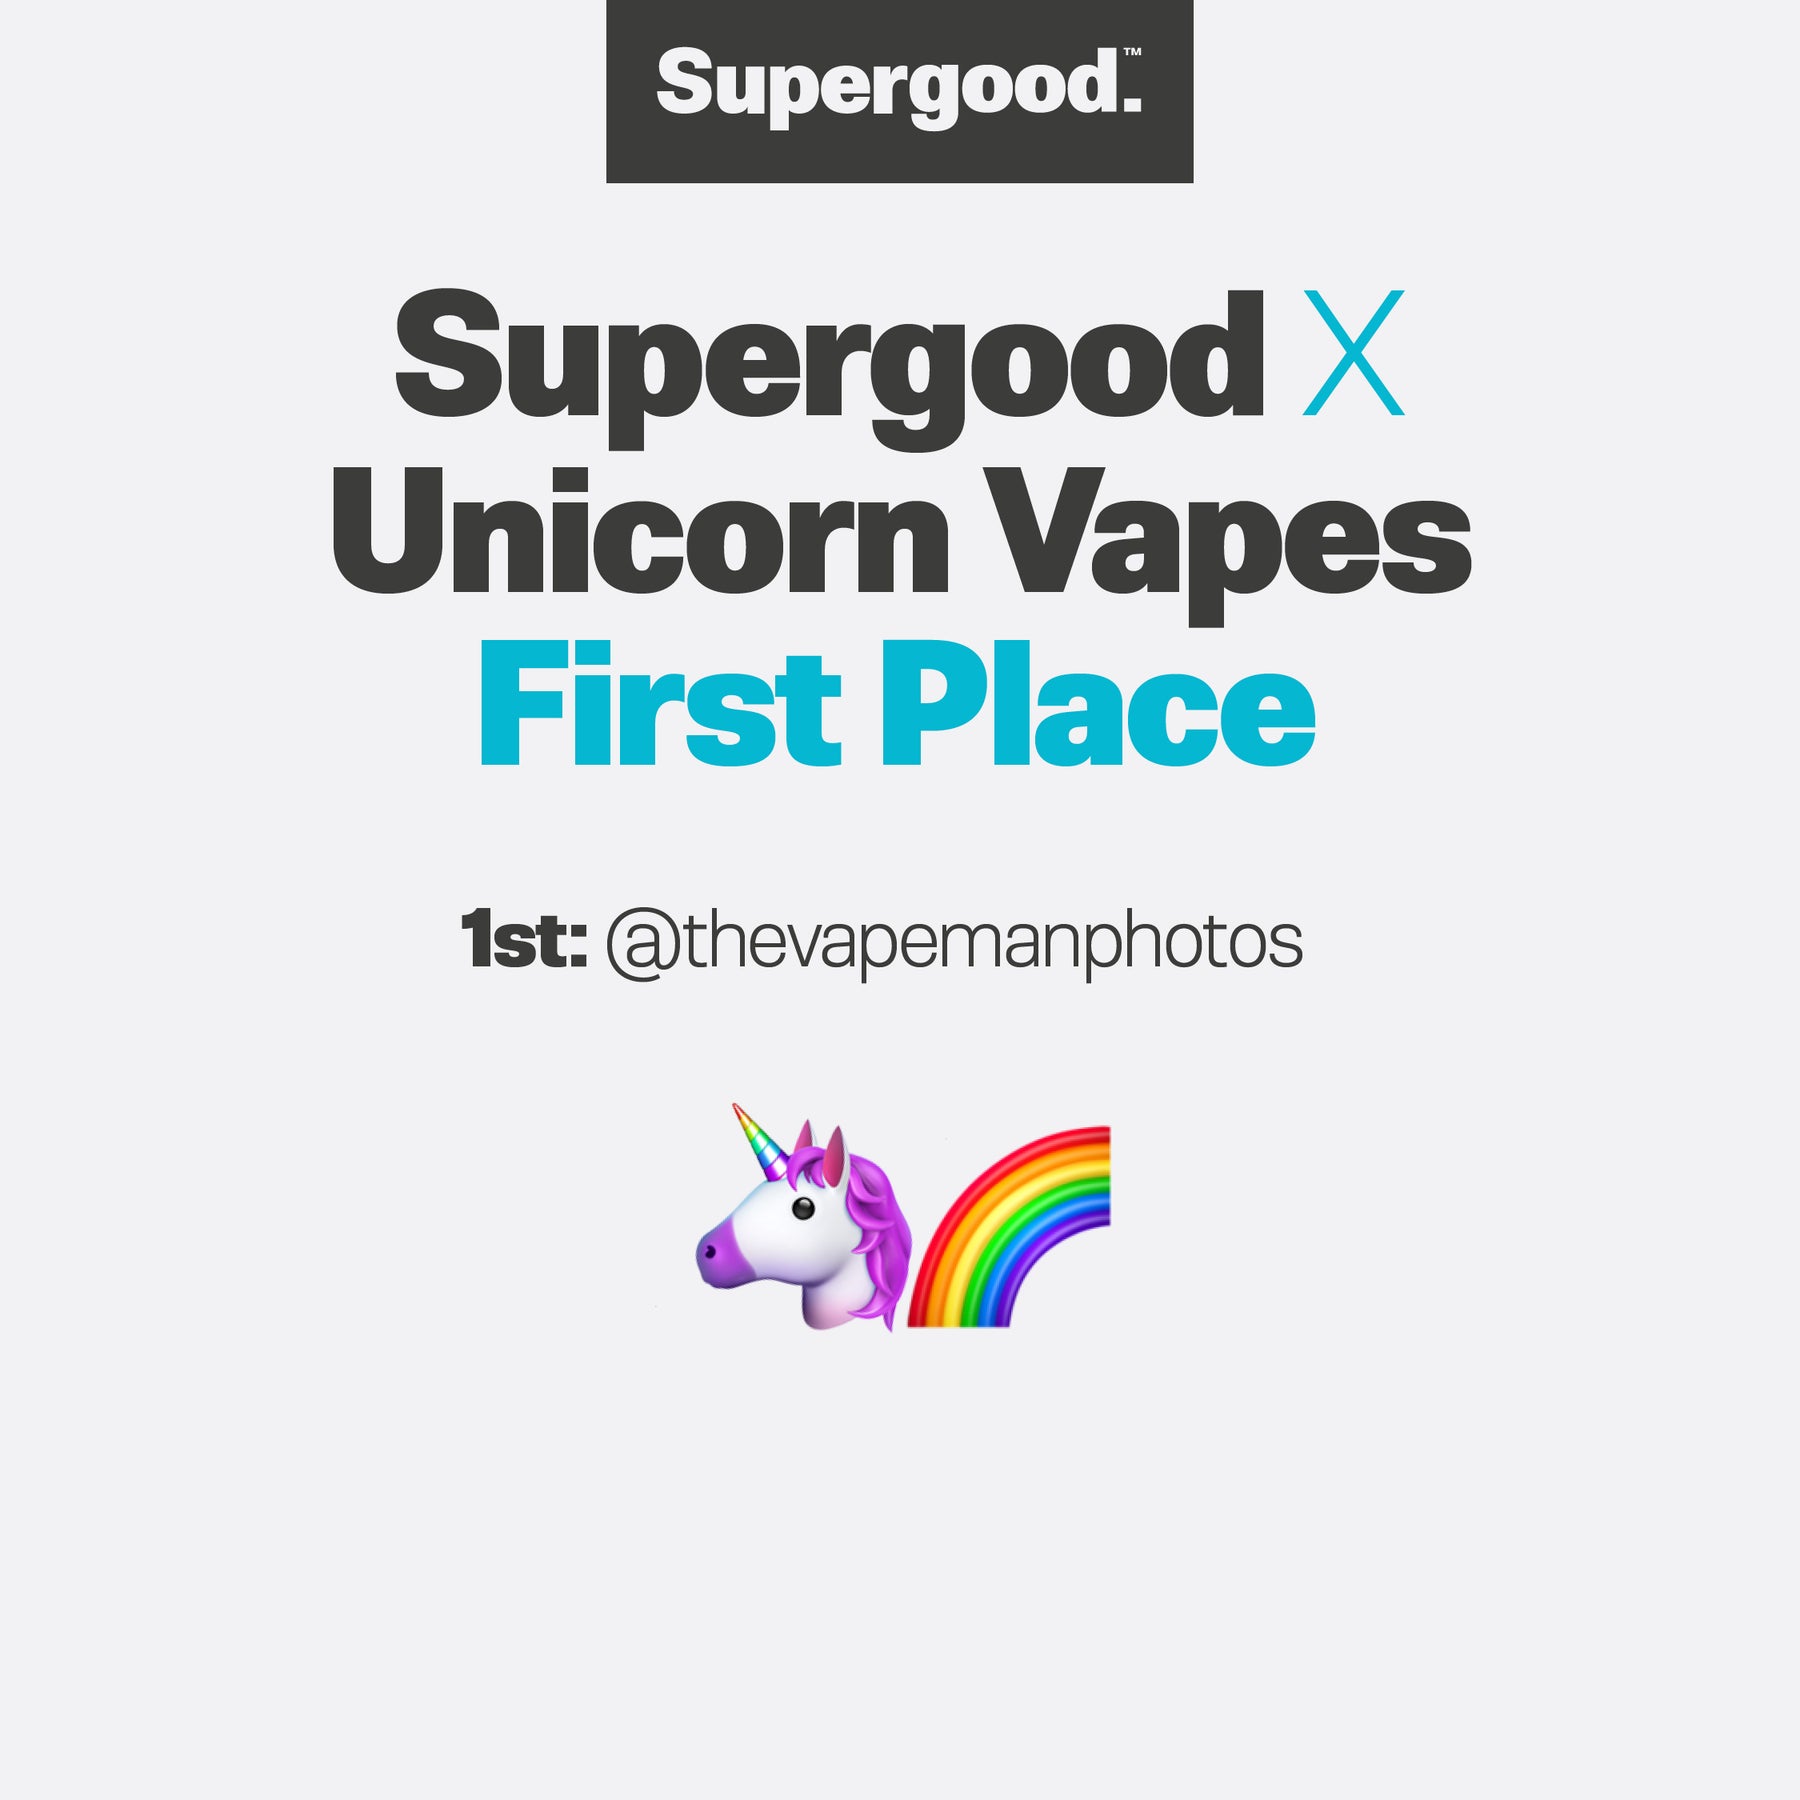 Supergood x Unicorn Vapes First Place.